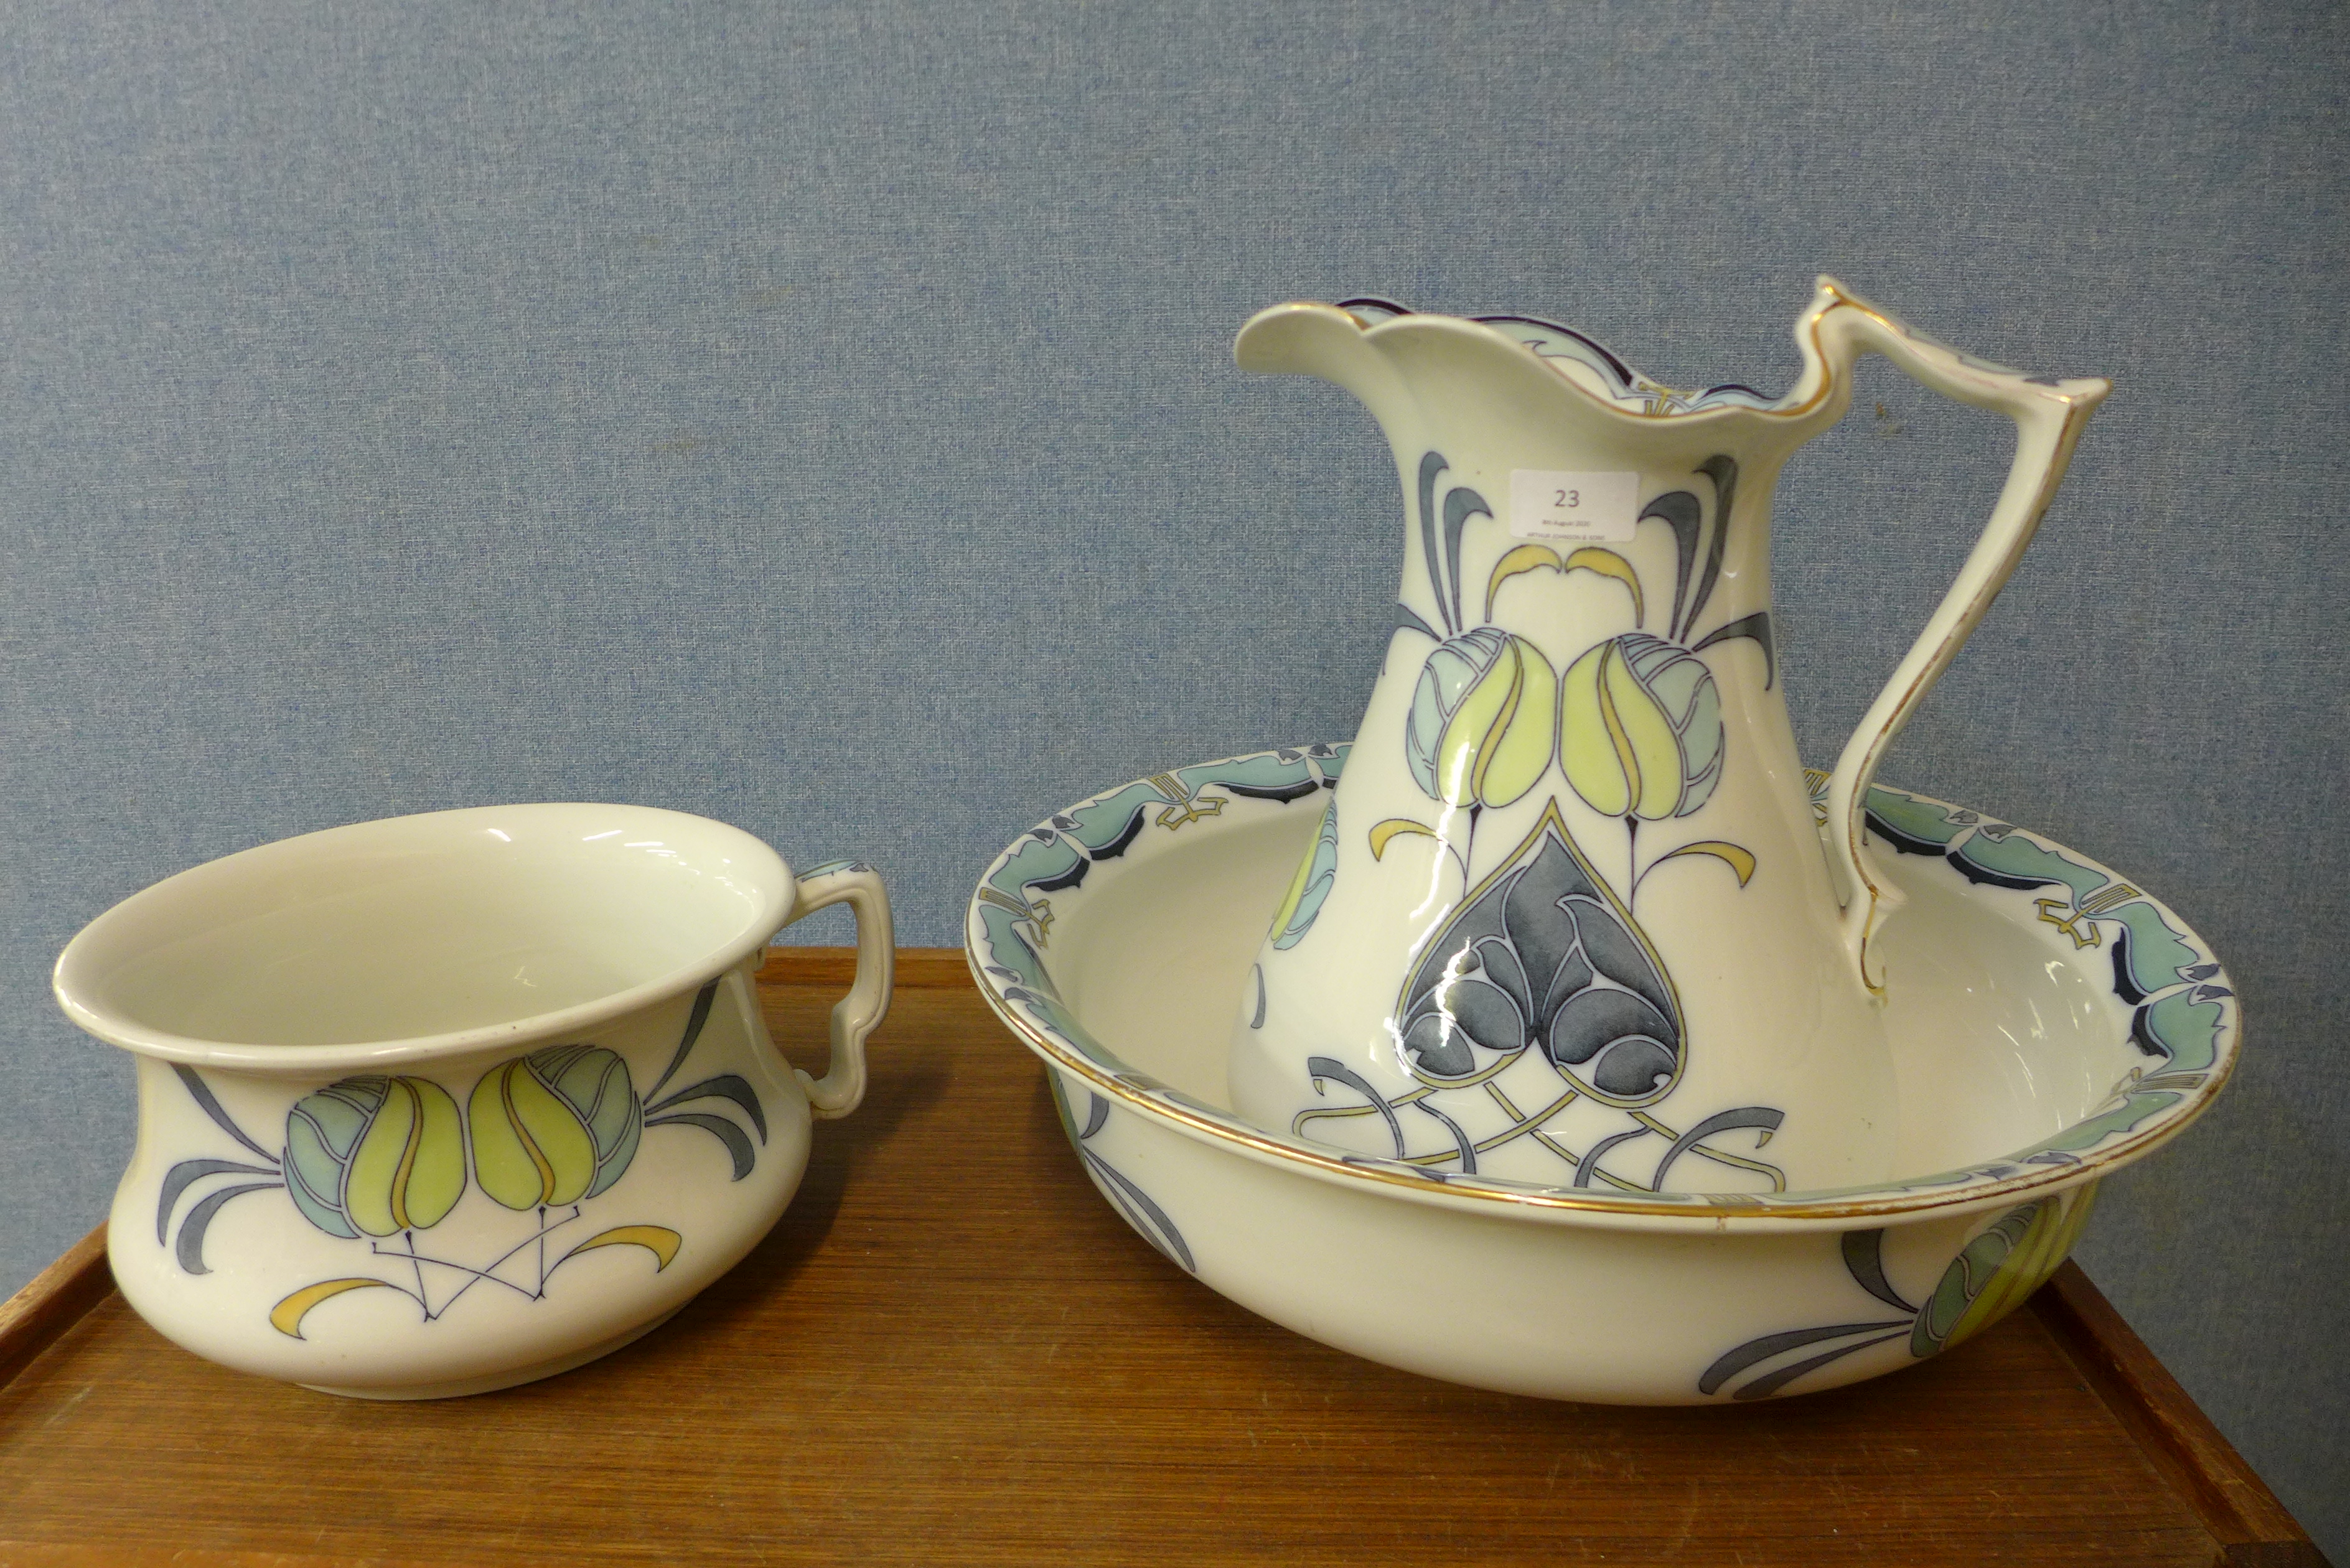 A Staffordshire Art Nouveau transfer printed porcelain wash jug, bowl and chamber pot